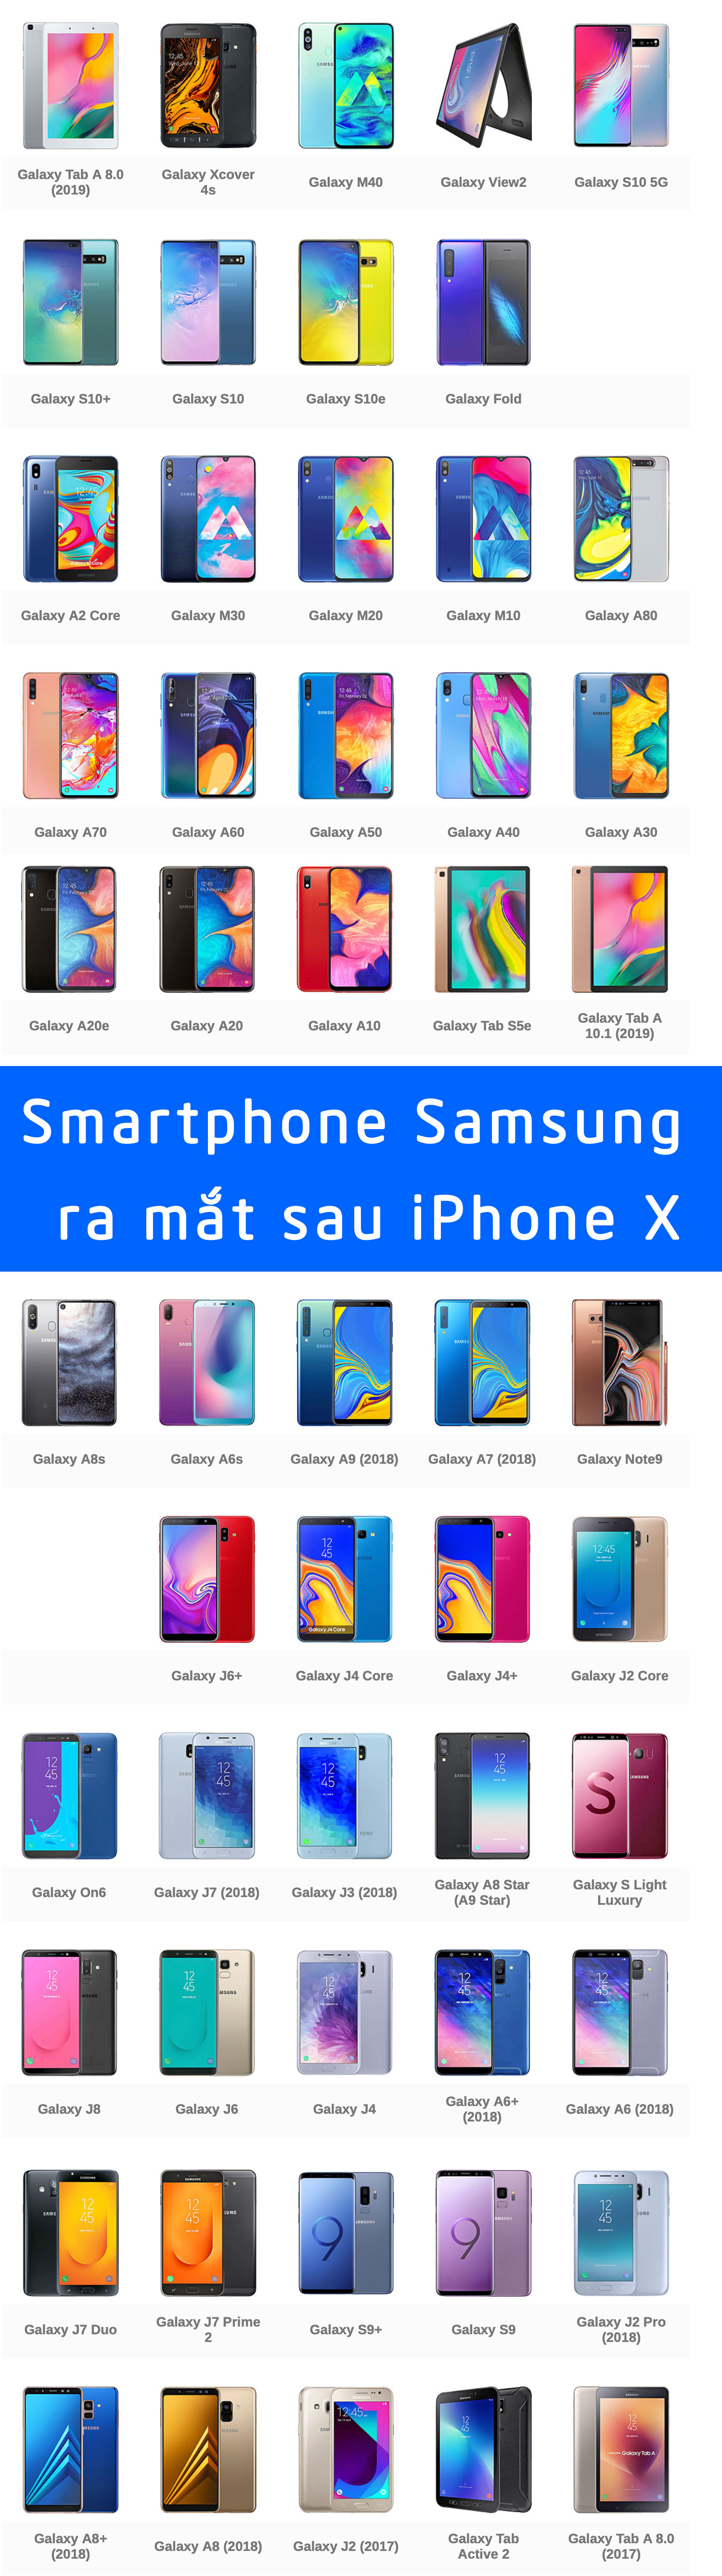 Smartphone-Samsung-Sau-iPhoneX.jpg